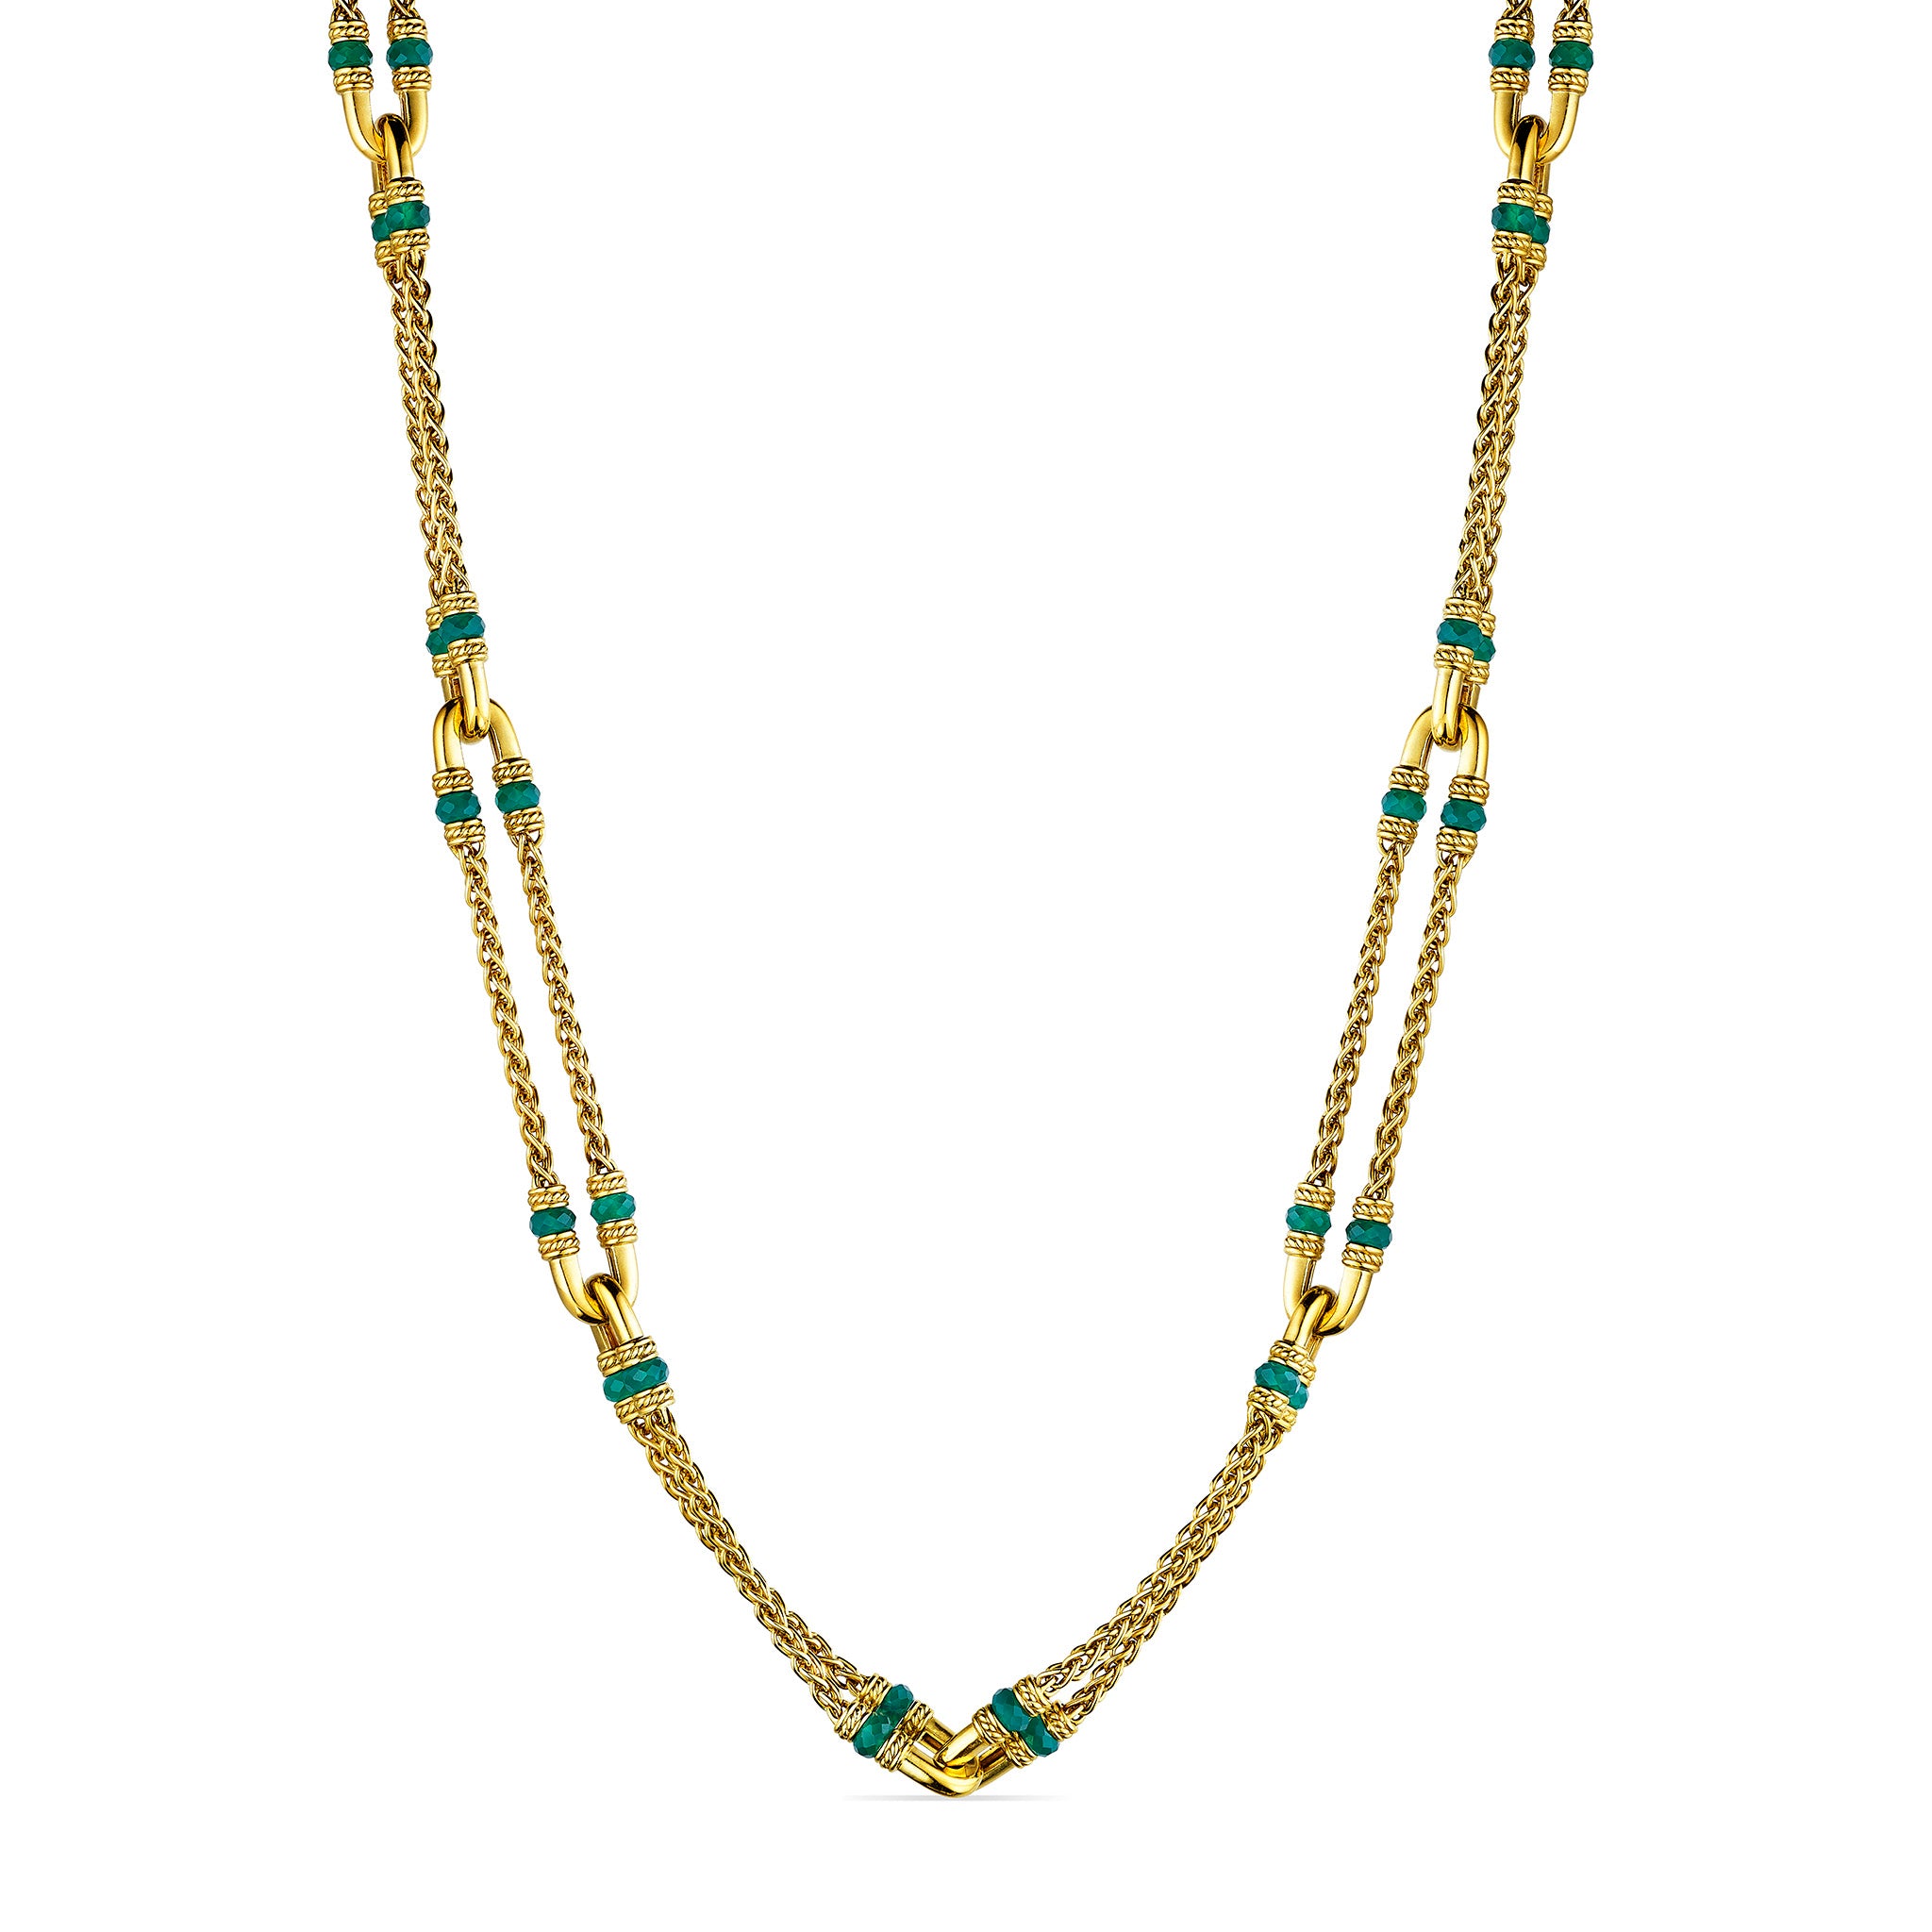 Ocean Reef Statement Necklace with Green Chalcedony in 18K Gold Vermei